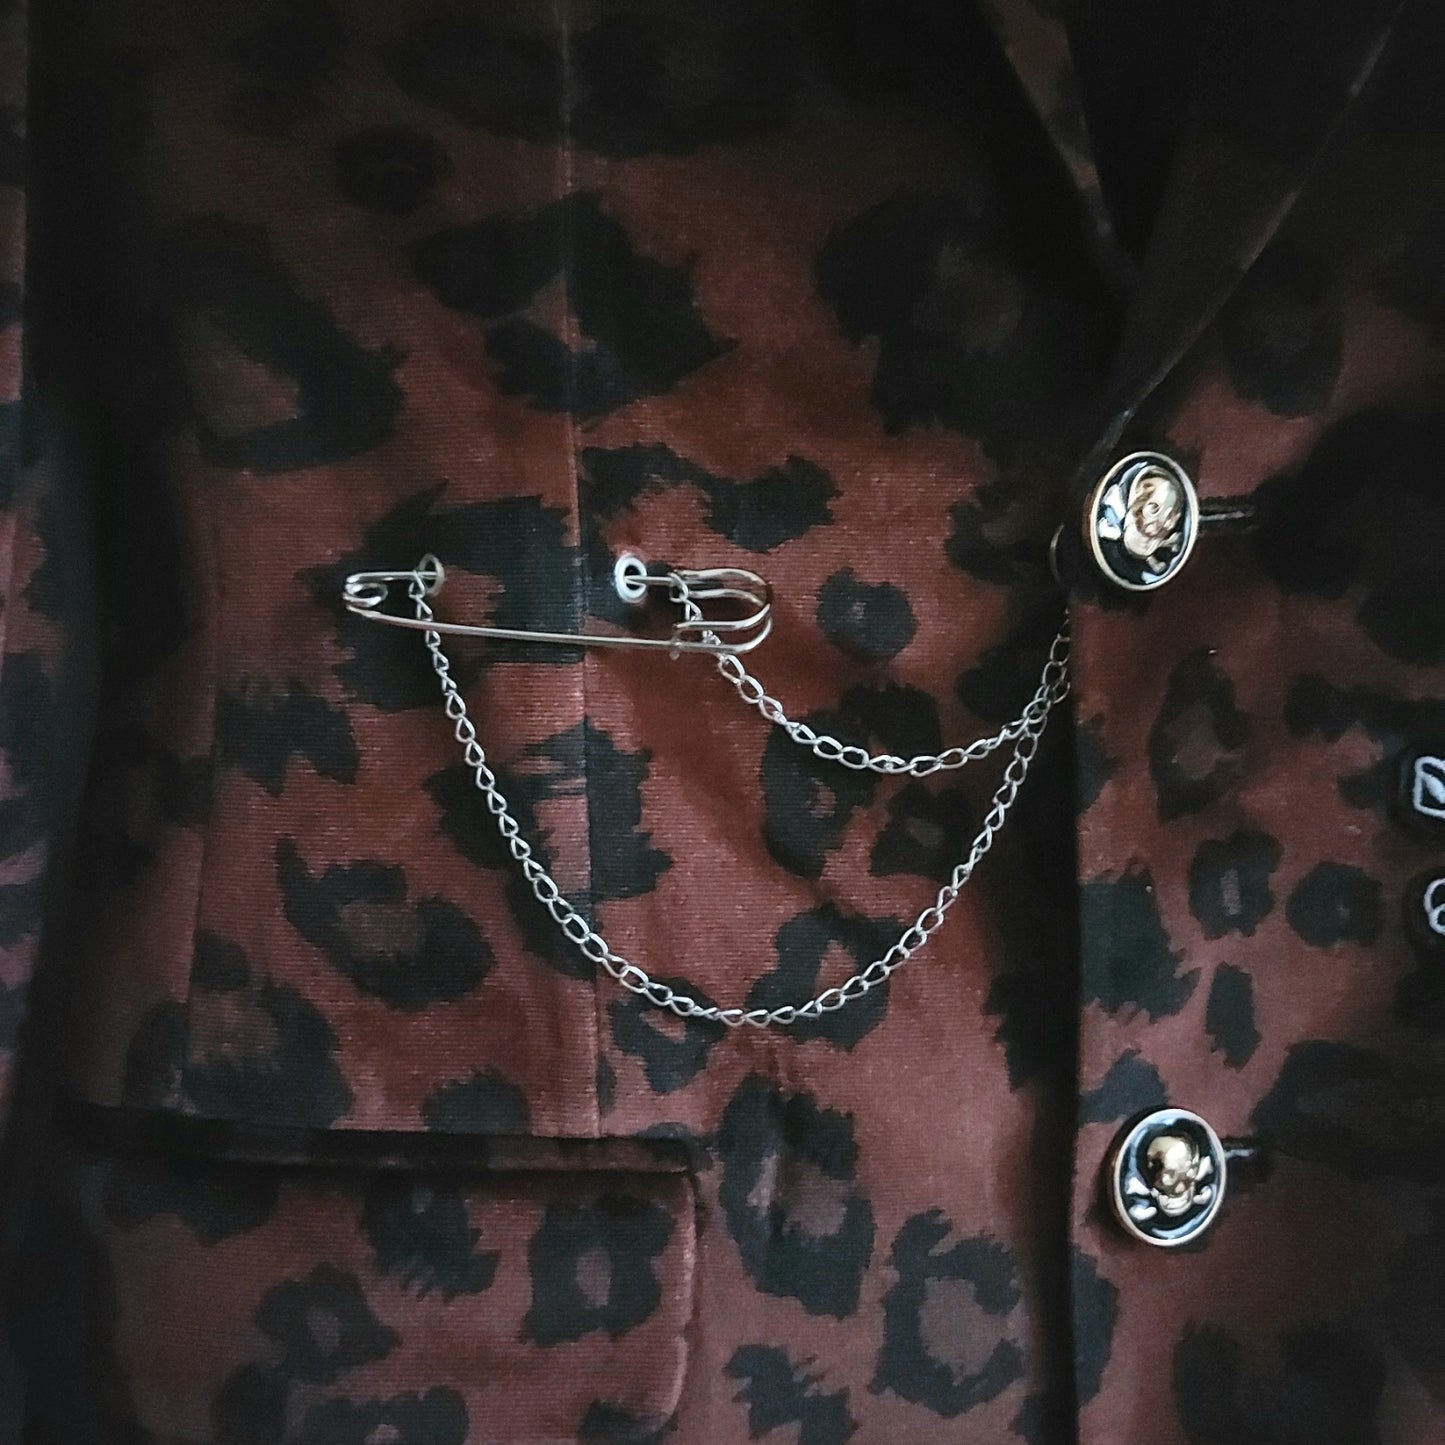 Goth Punk Emo Leopard Jacket - 34" Chest